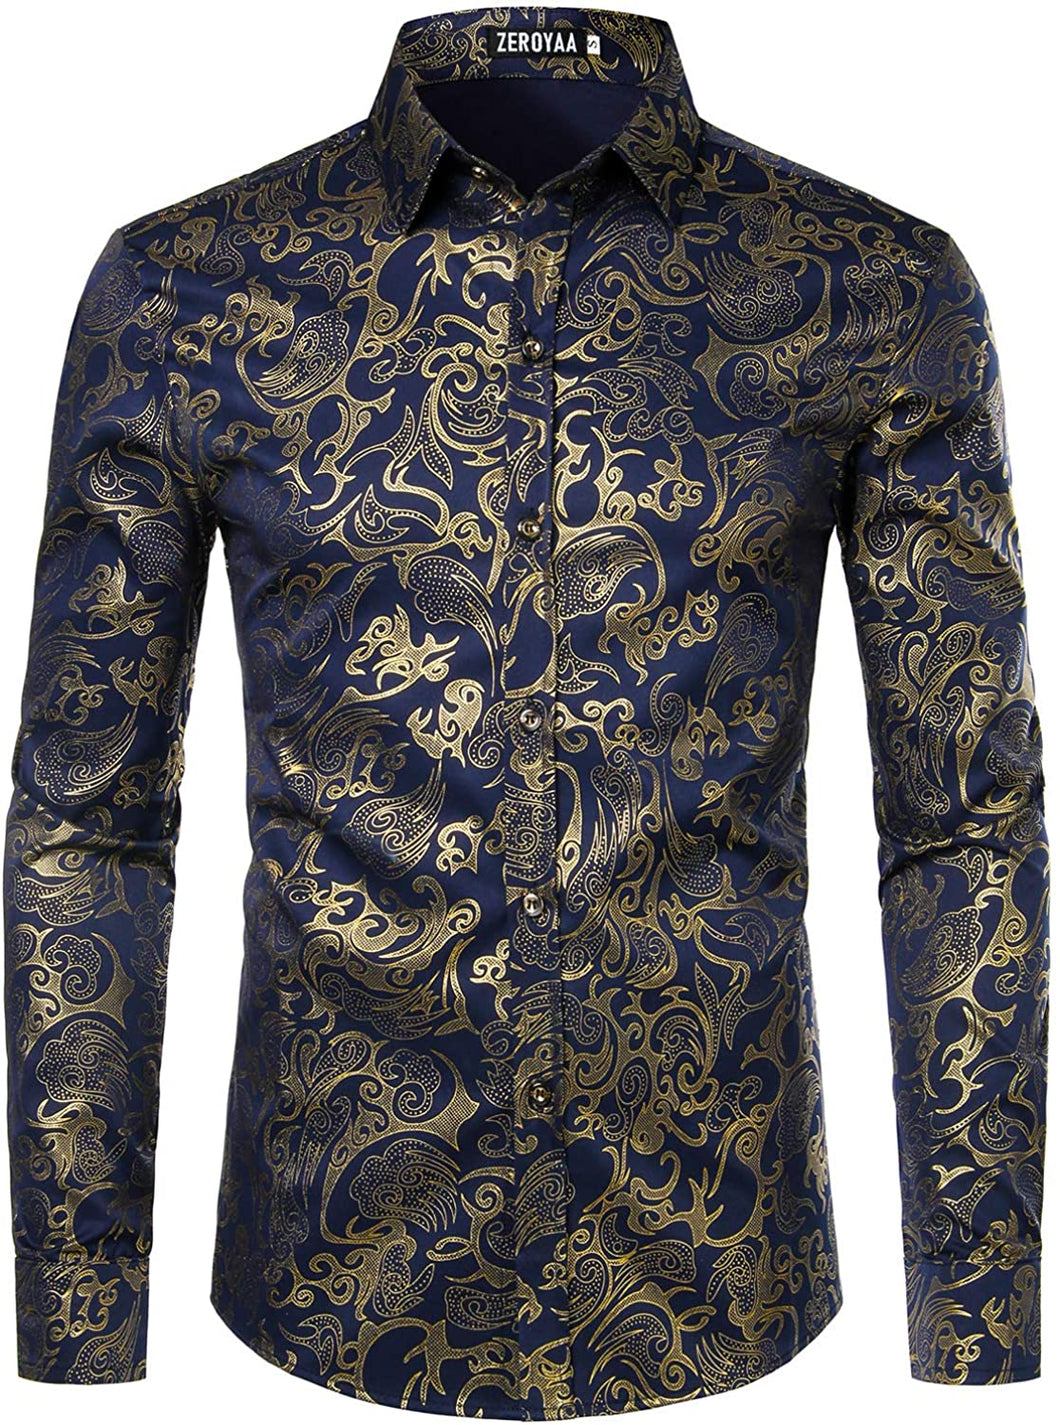 Men's Long Sleeve Navy-Gold Paisley Printed Dress Shirt